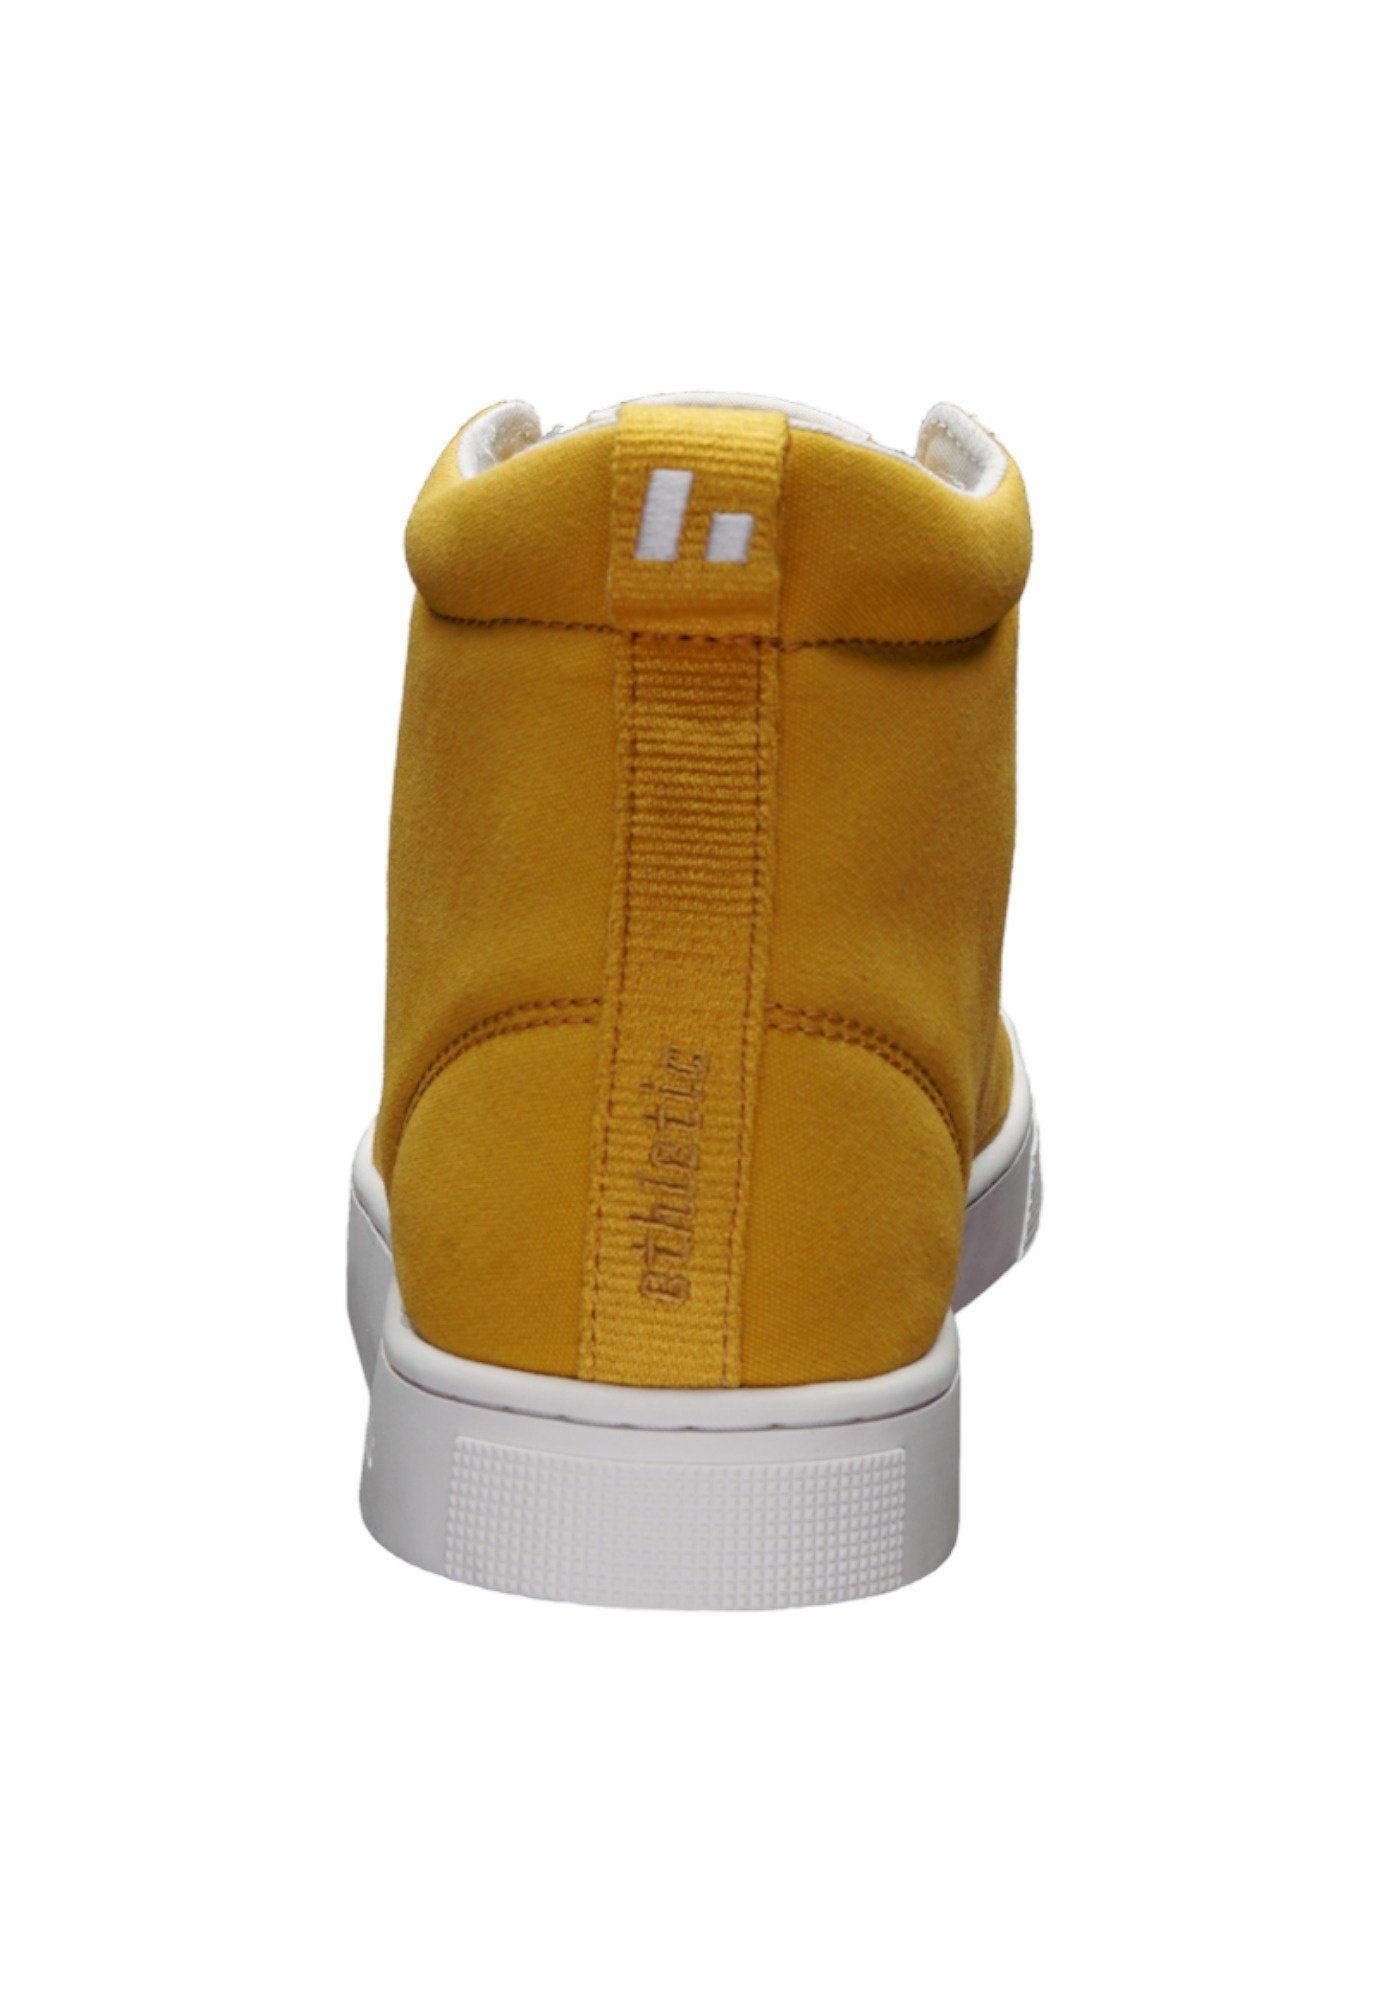 Cut ETHLETIC Sneaker Hi Fairtrade White Yellow Mustard Produkt Just - Active